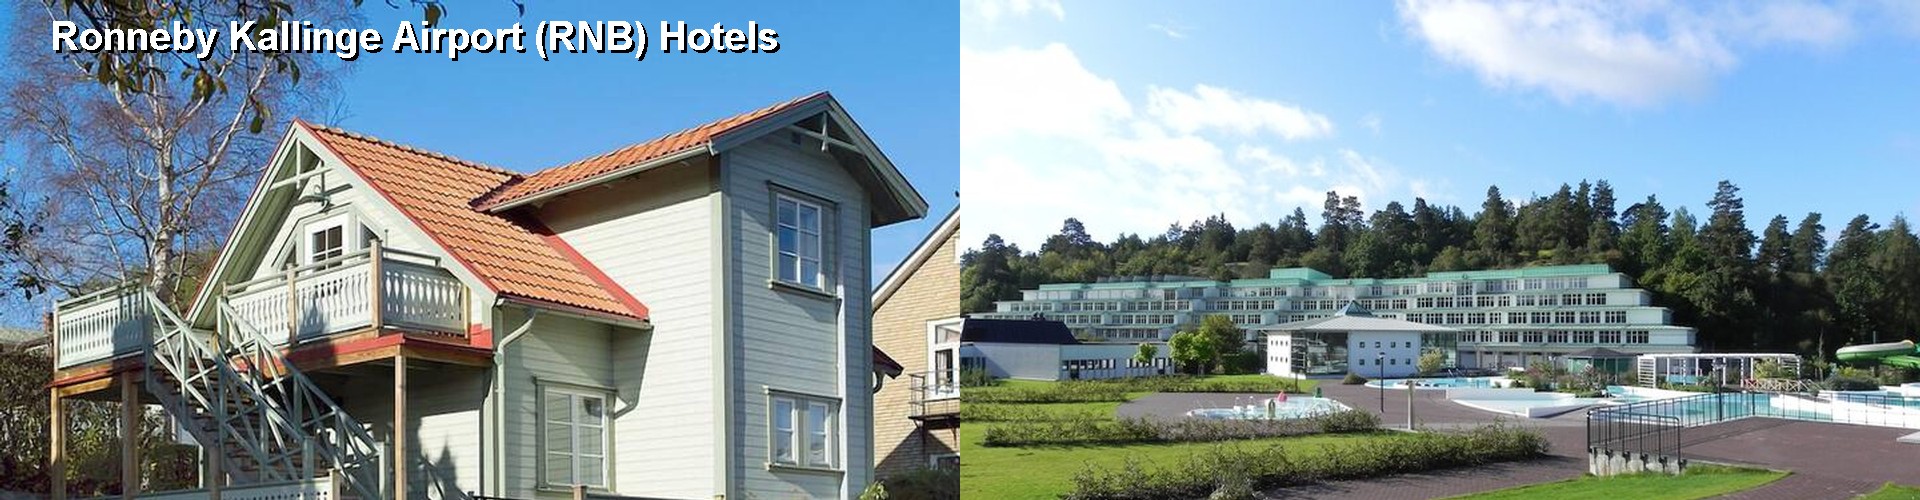 3 Best Hotels near Ronneby Kallinge Airport (RNB)